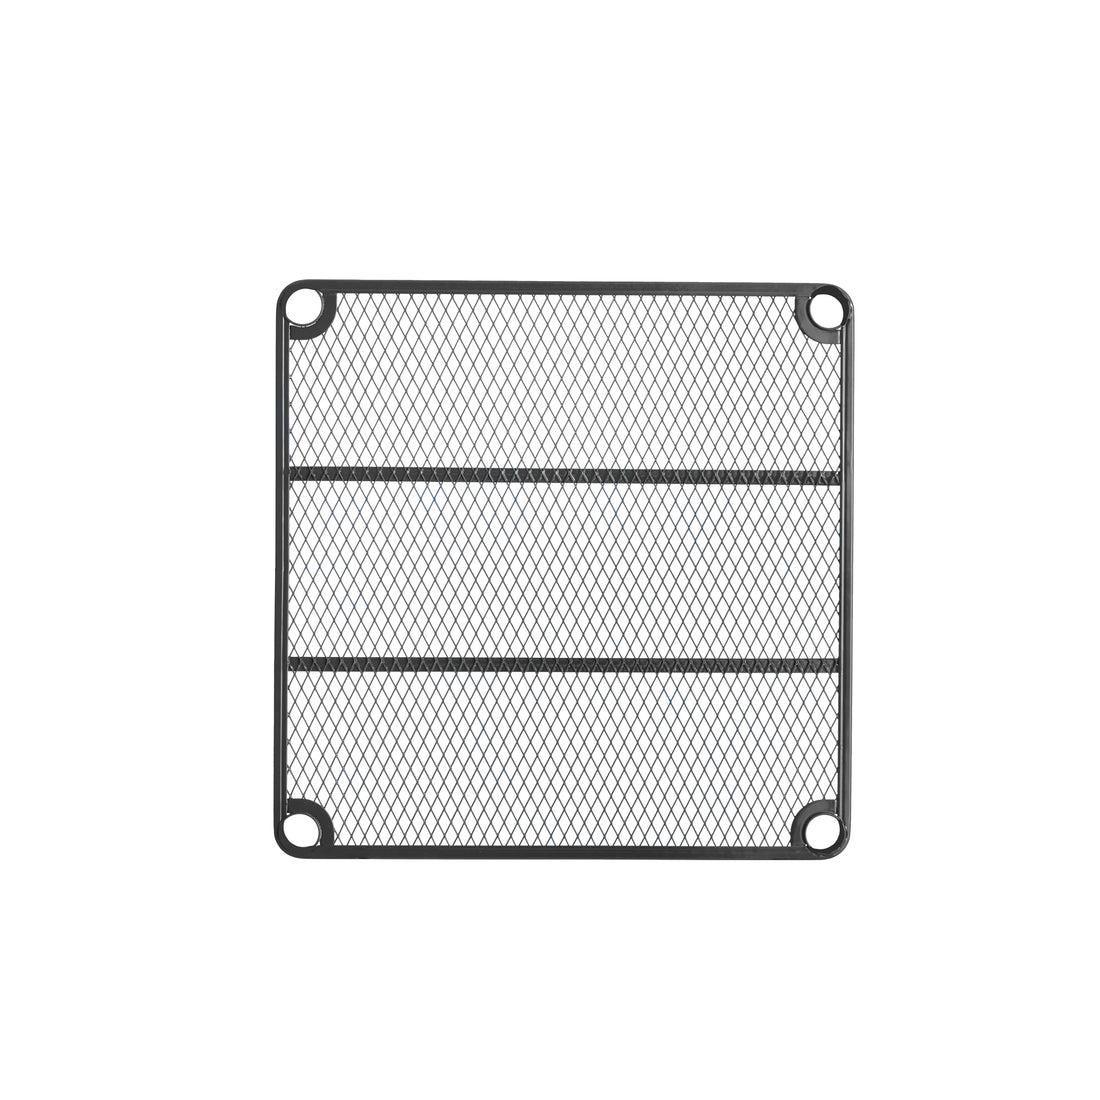 MeshWorks® epoxy coated steel additional shelf (17.7x17.7)